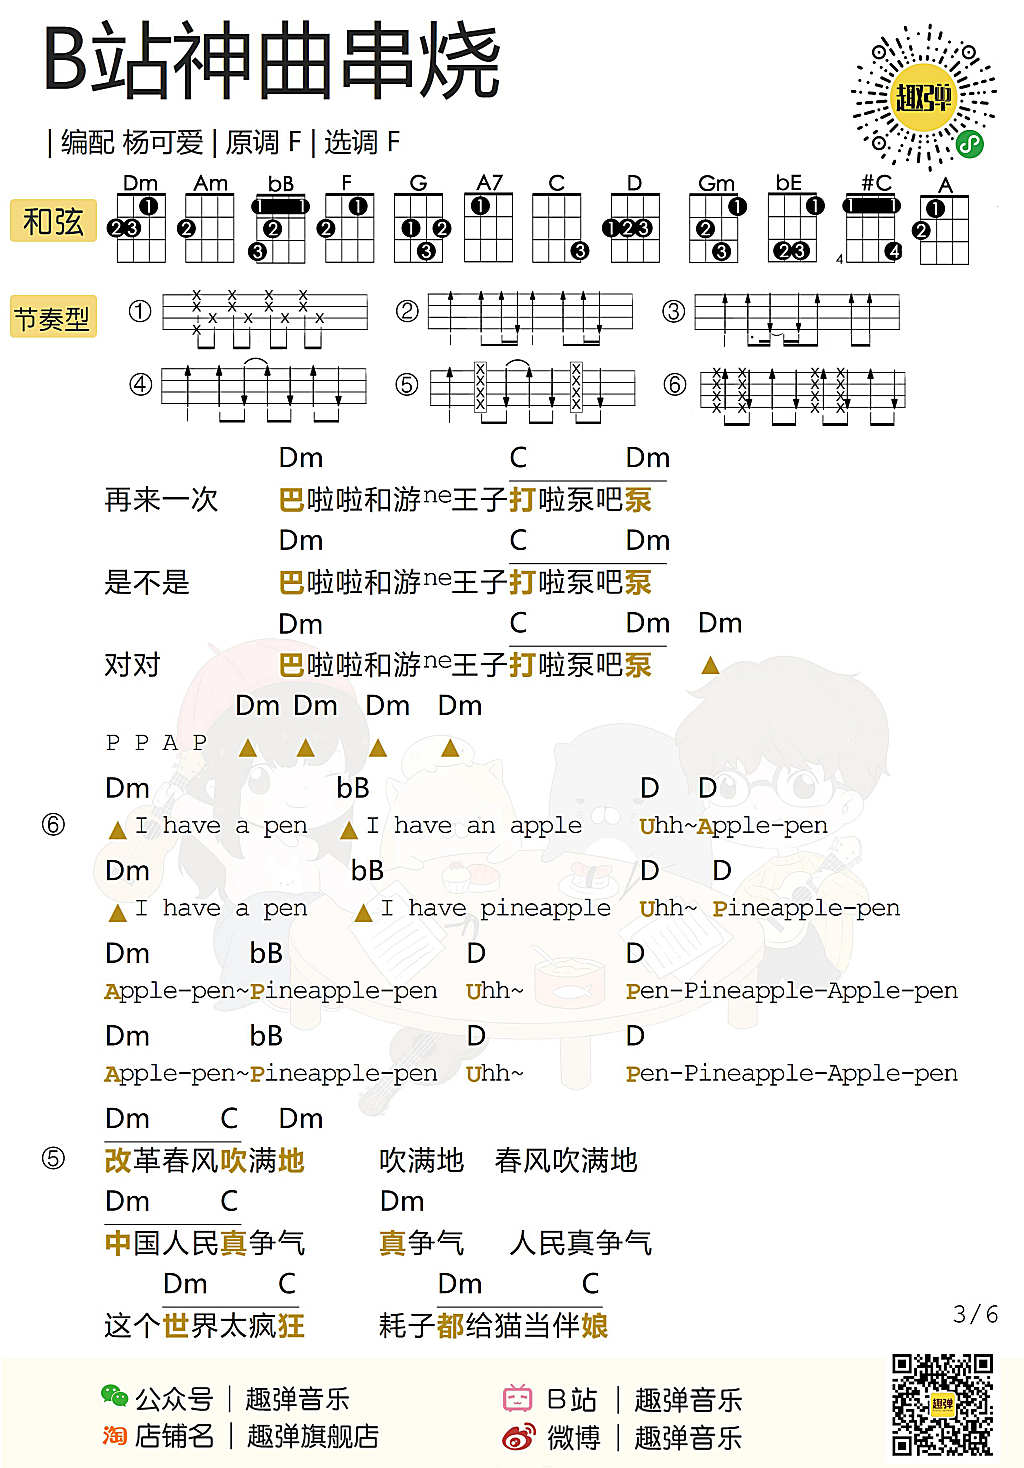 《B站神曲串烧》ukulele吉他谱演示-杨可爱-C大调音乐网